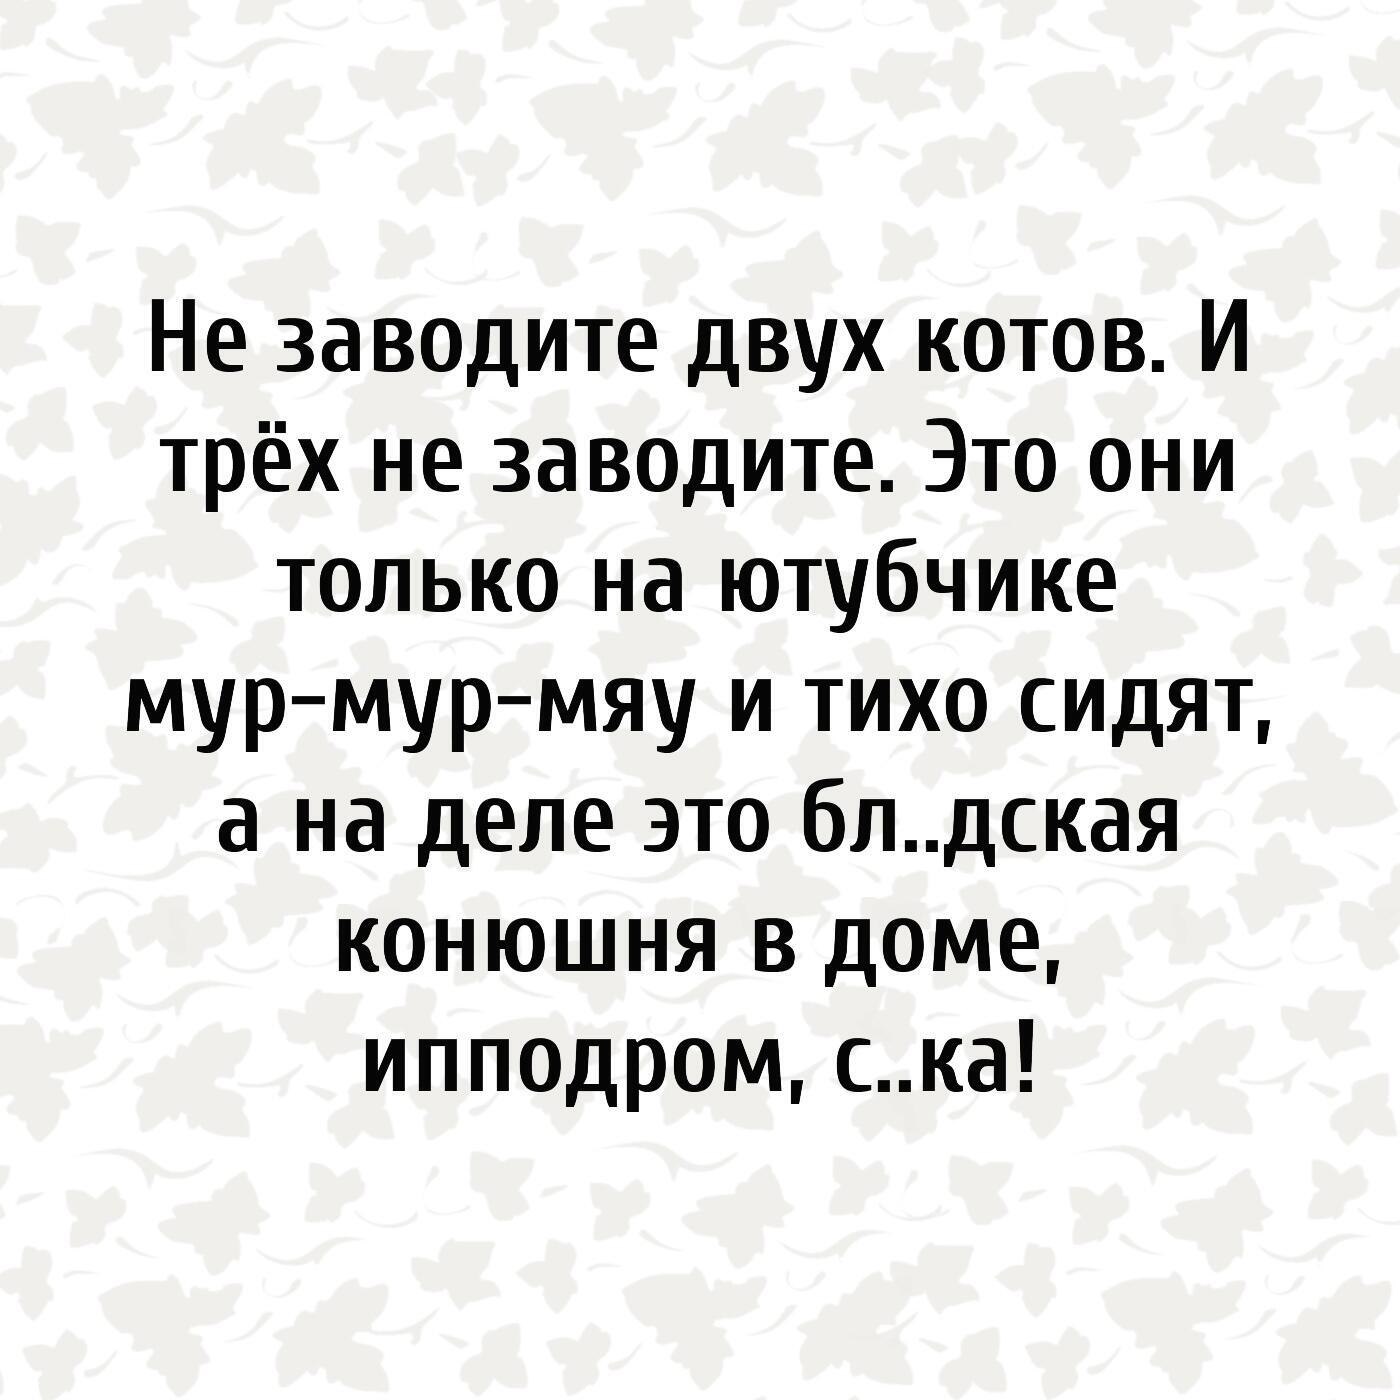 ***Victoria Viktorovna*** - 22  2021  01:30